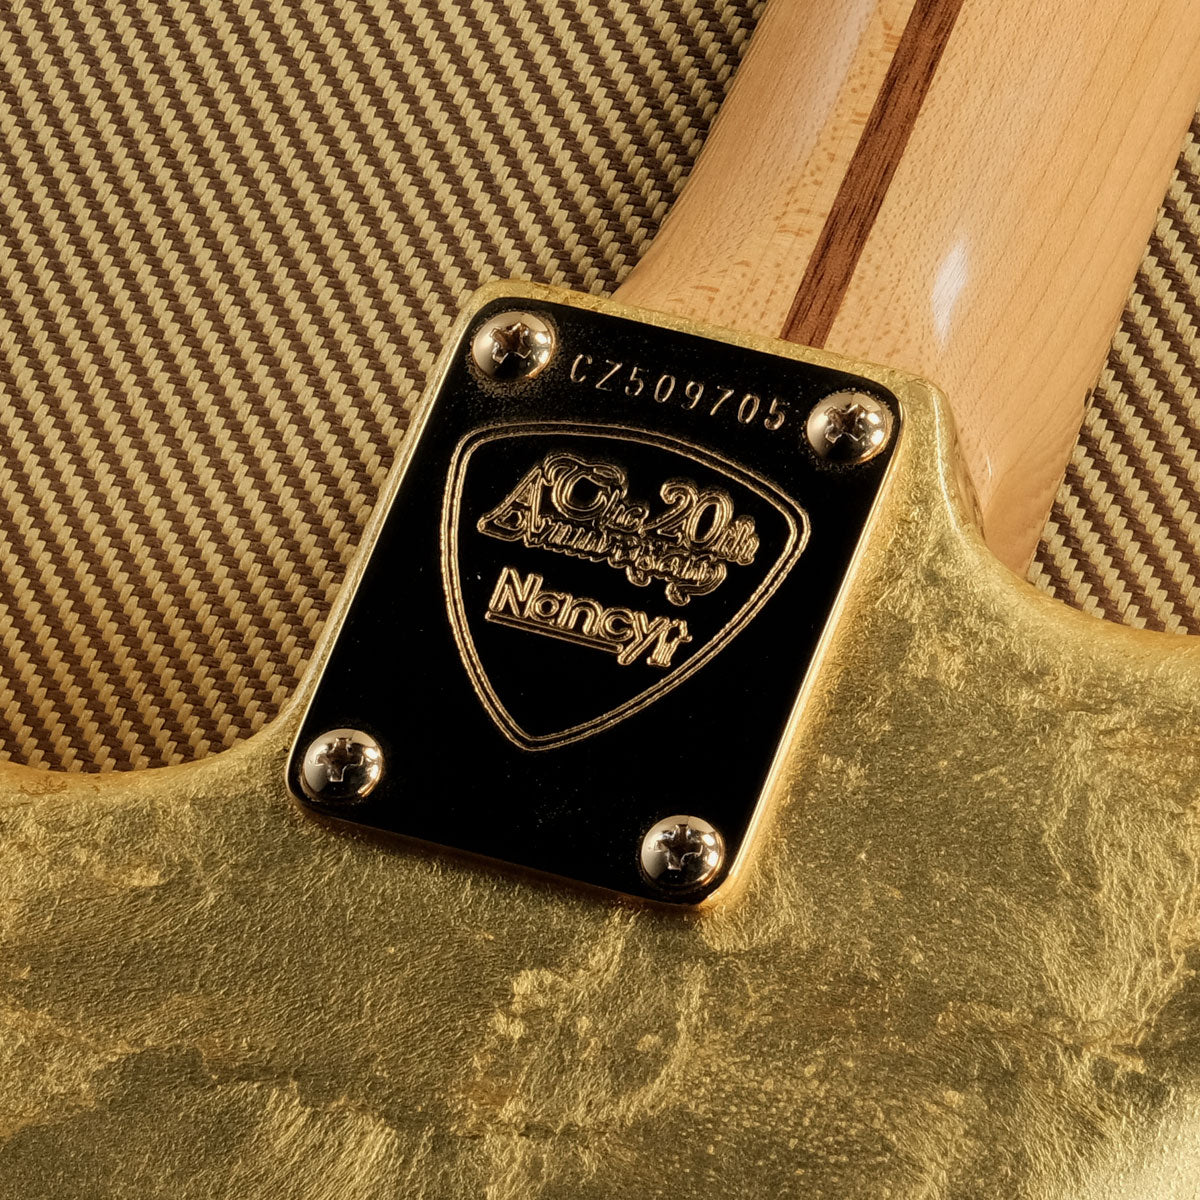 [SN CZ509705] USED FENDER CUSTOM SHOP / Master Built Series 1957 Stratocaster Gold Leaf Built by Todd Krause [05]